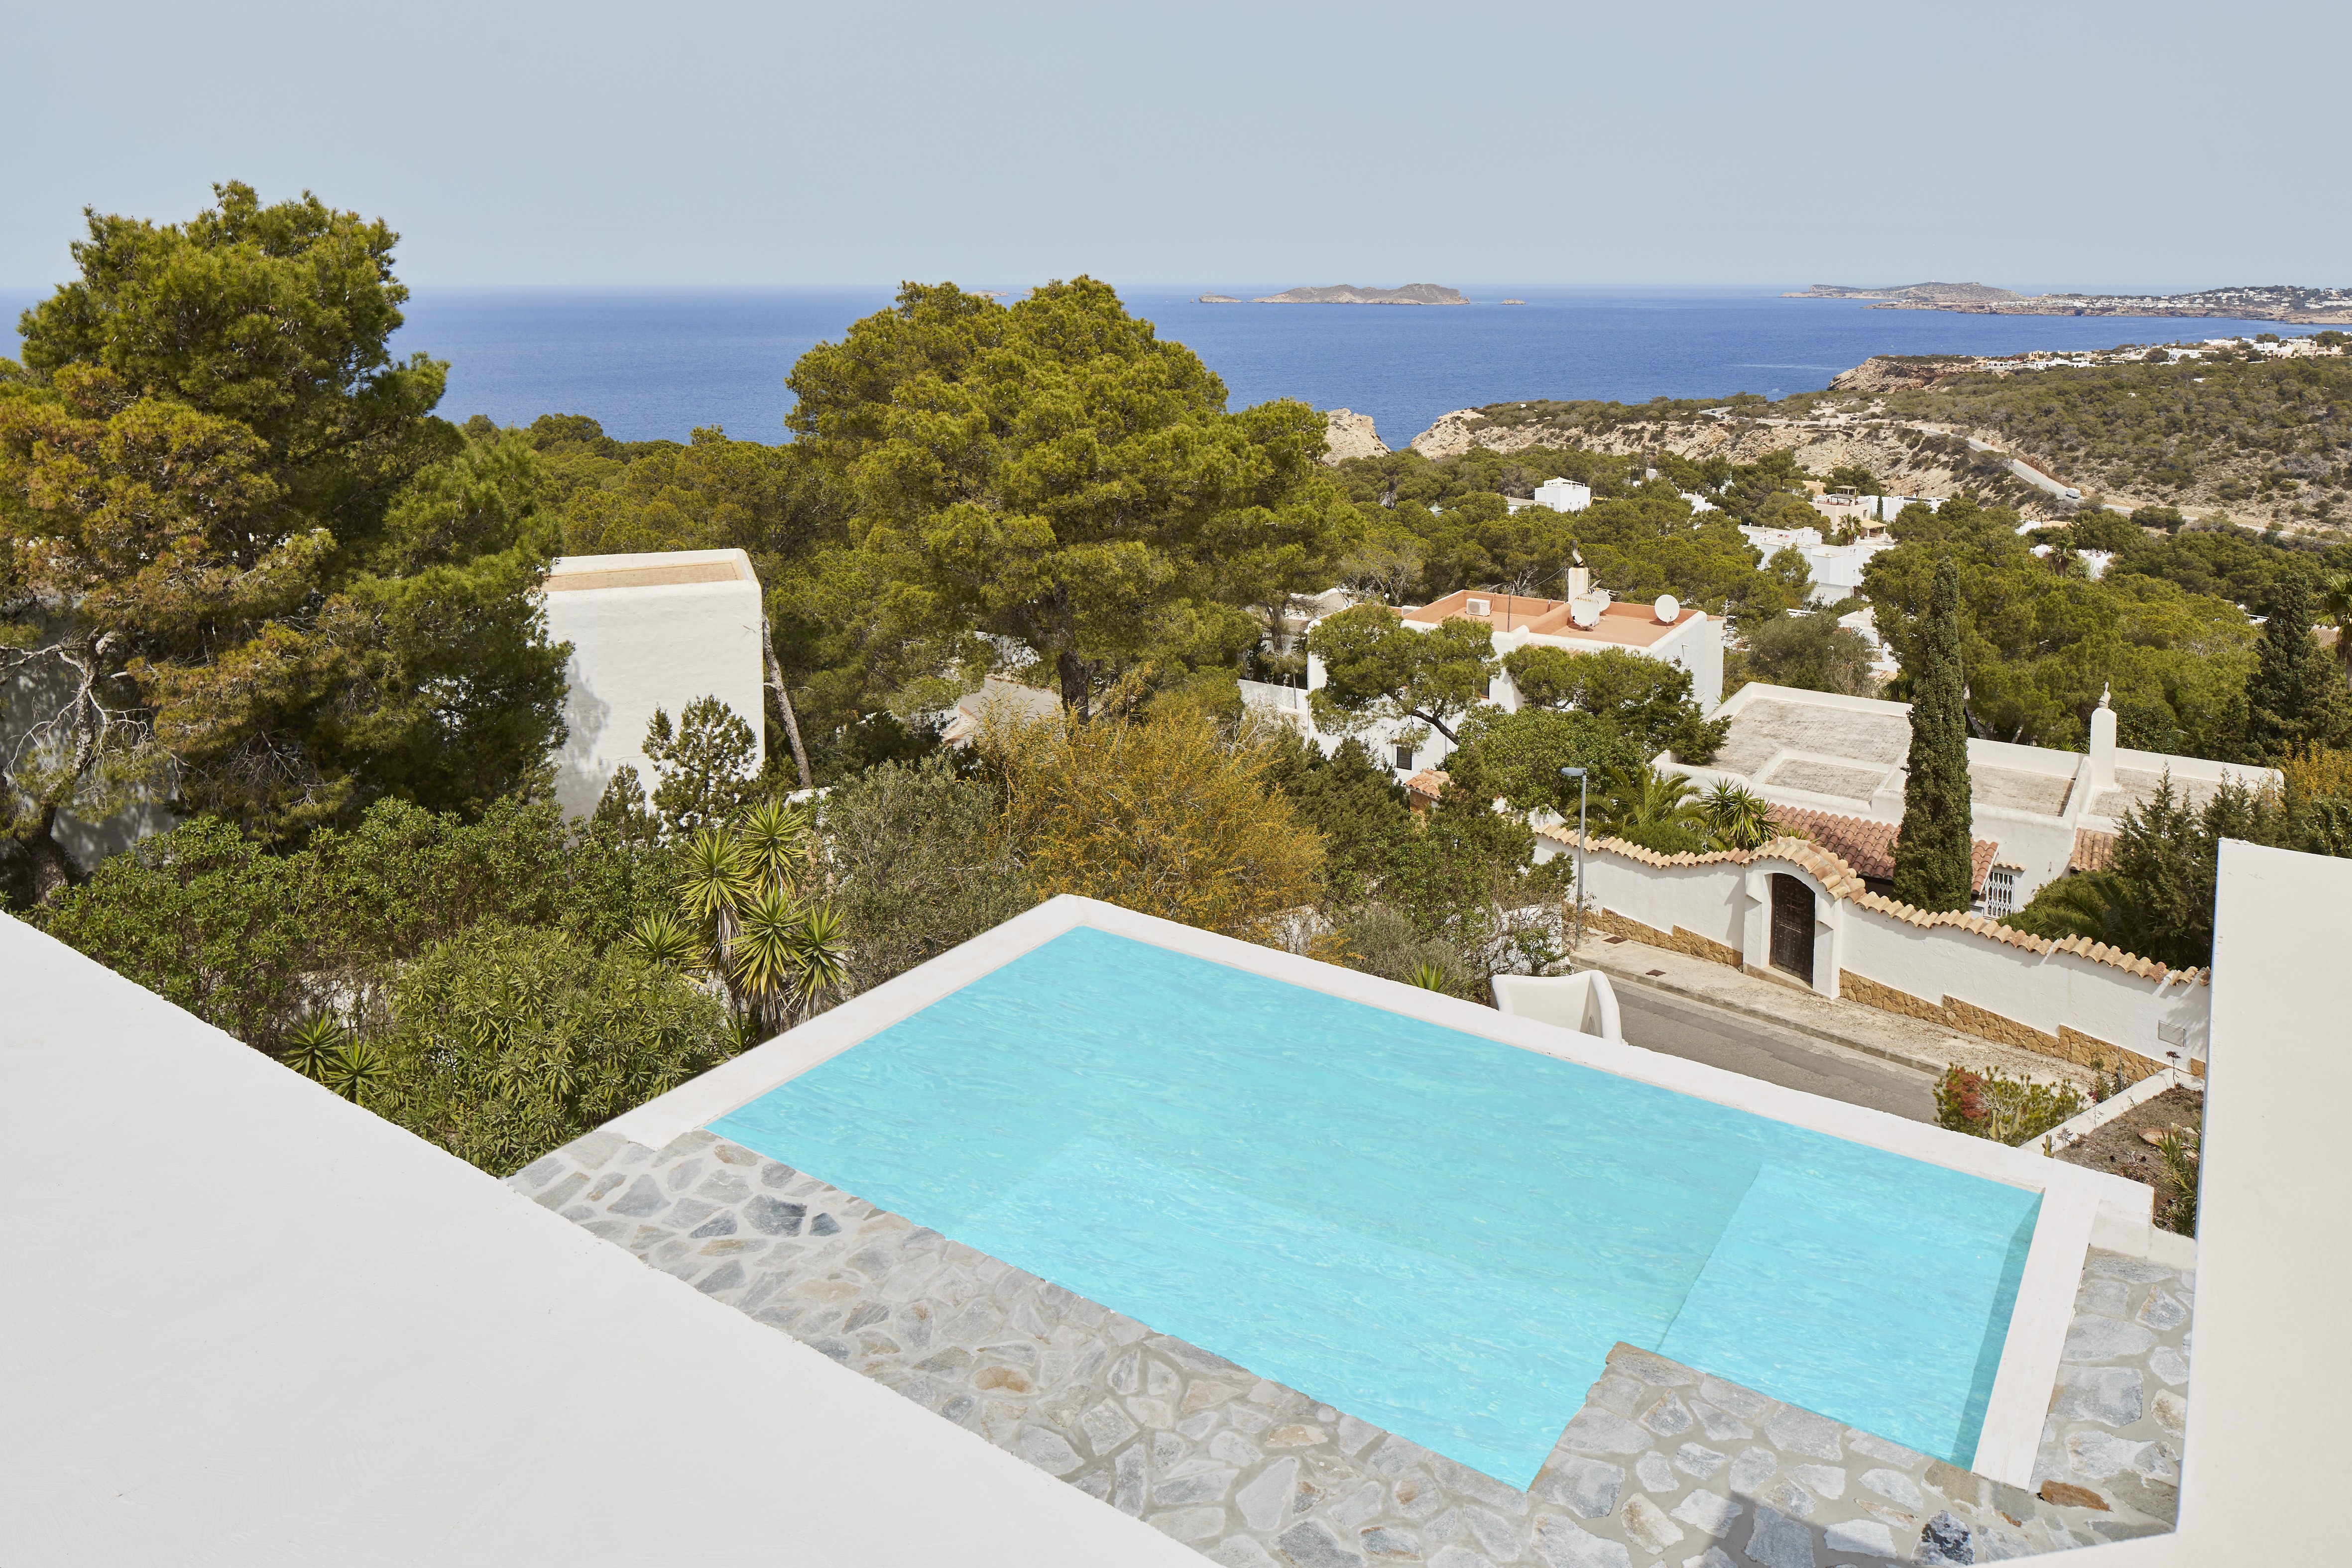 Brand new renovated villa with stunning sea views - 2